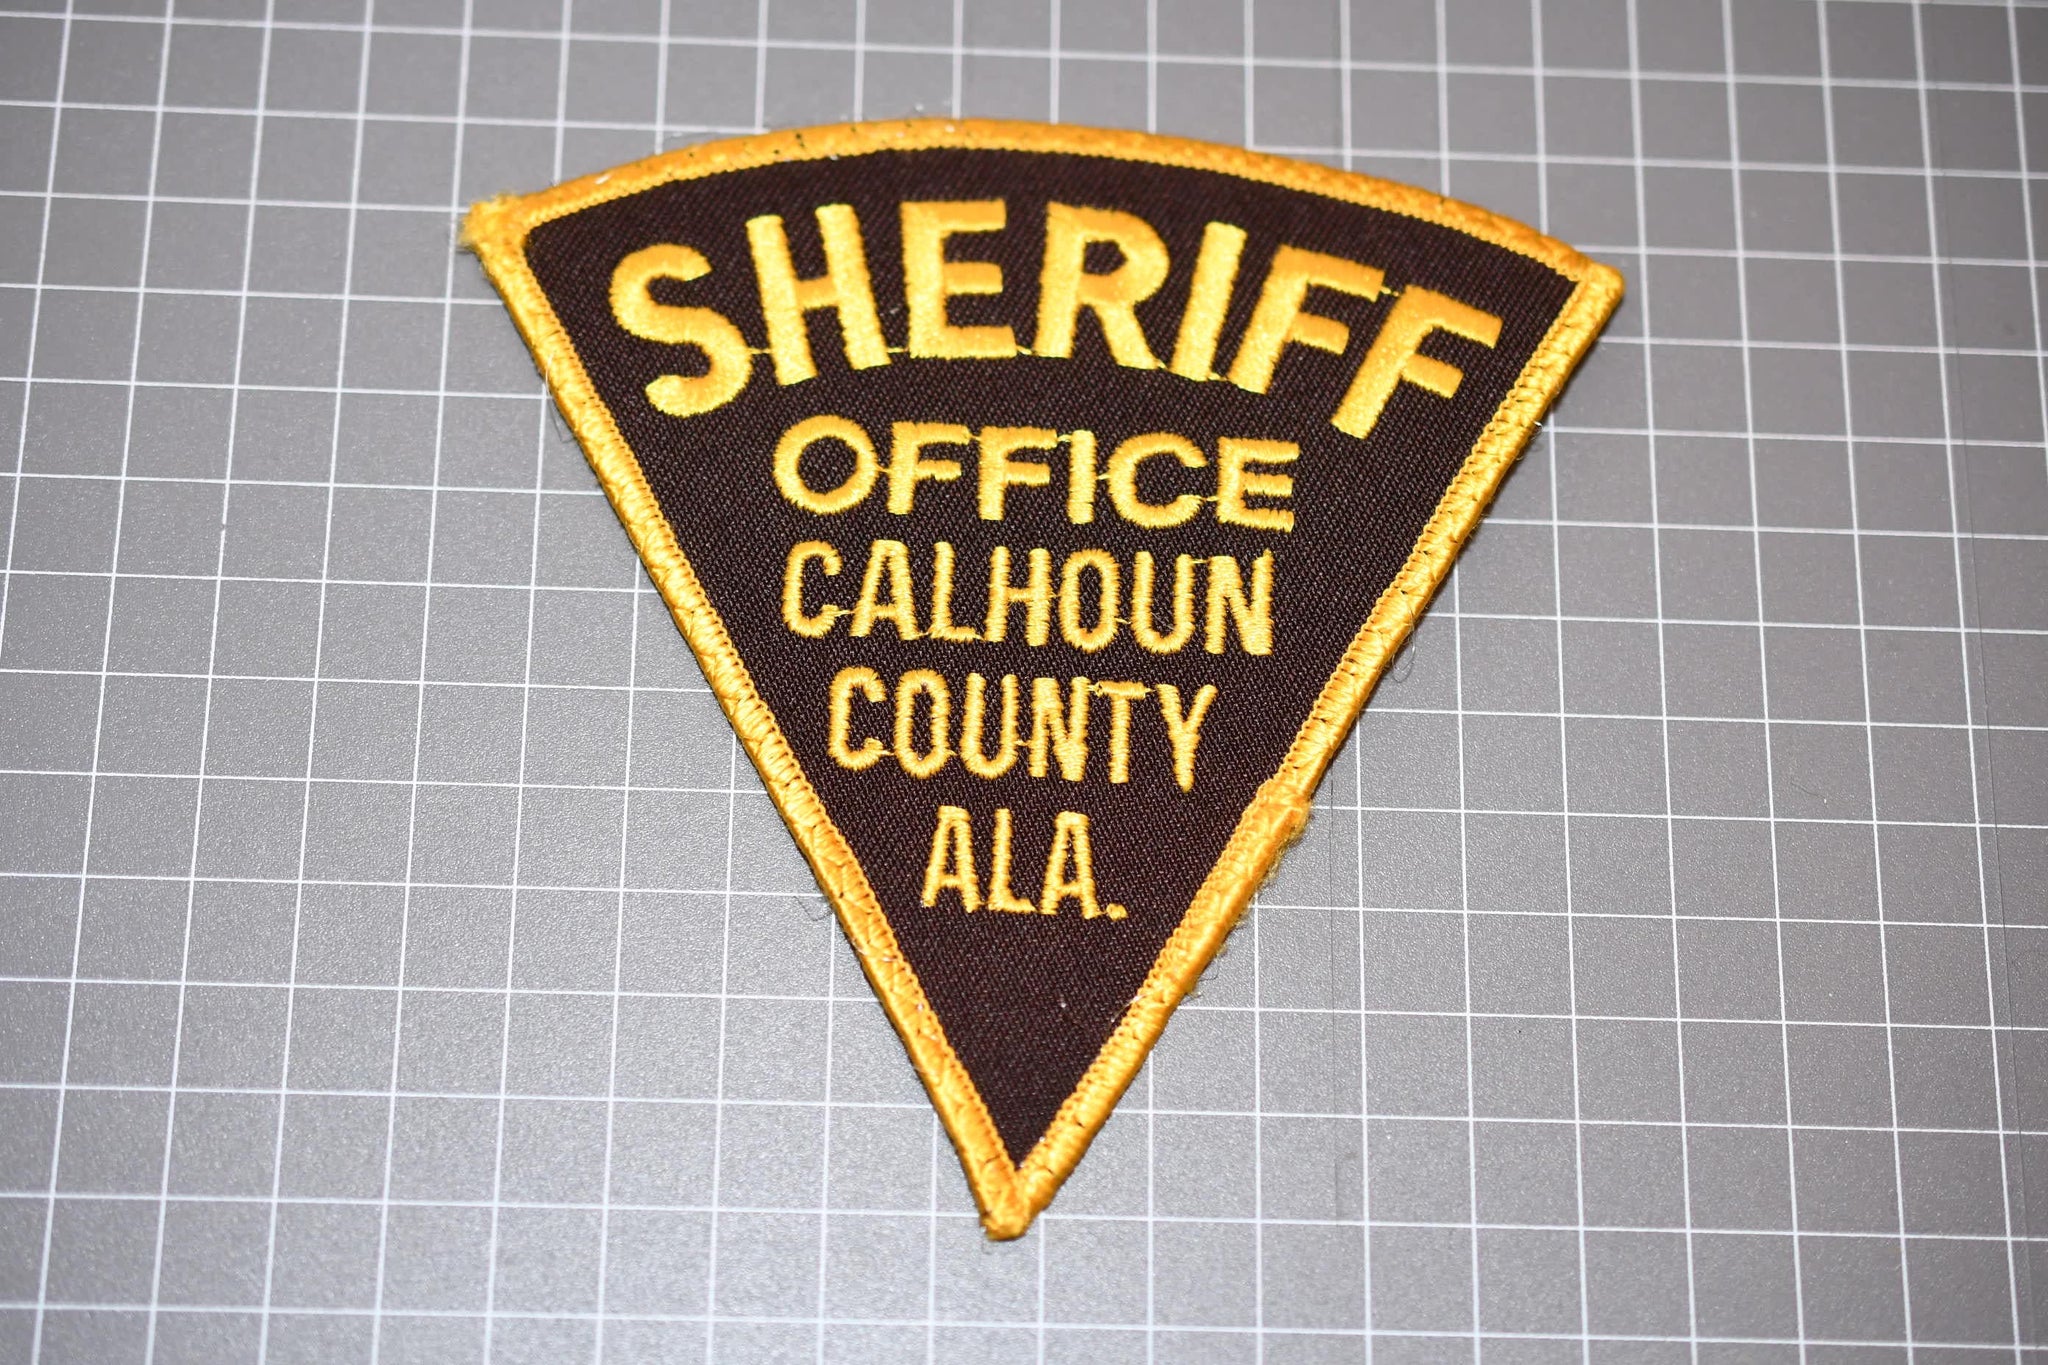 Callhoun Country Alabama Sheriff Patch (B6)